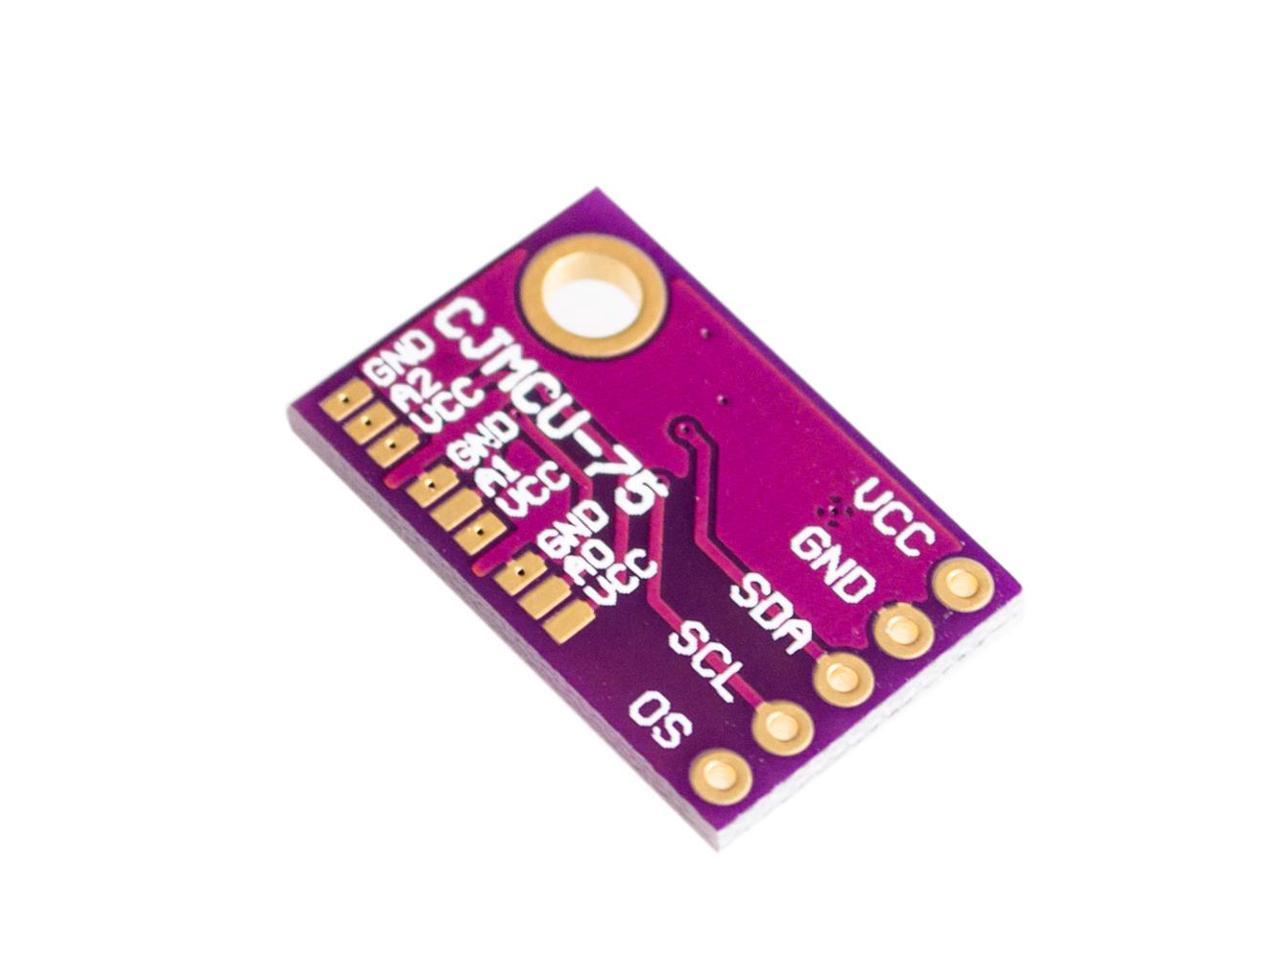 NOYITO LM75 High-Precision Temperature Sensor Module High-Speed I2C Interface LM75A Development Board Module